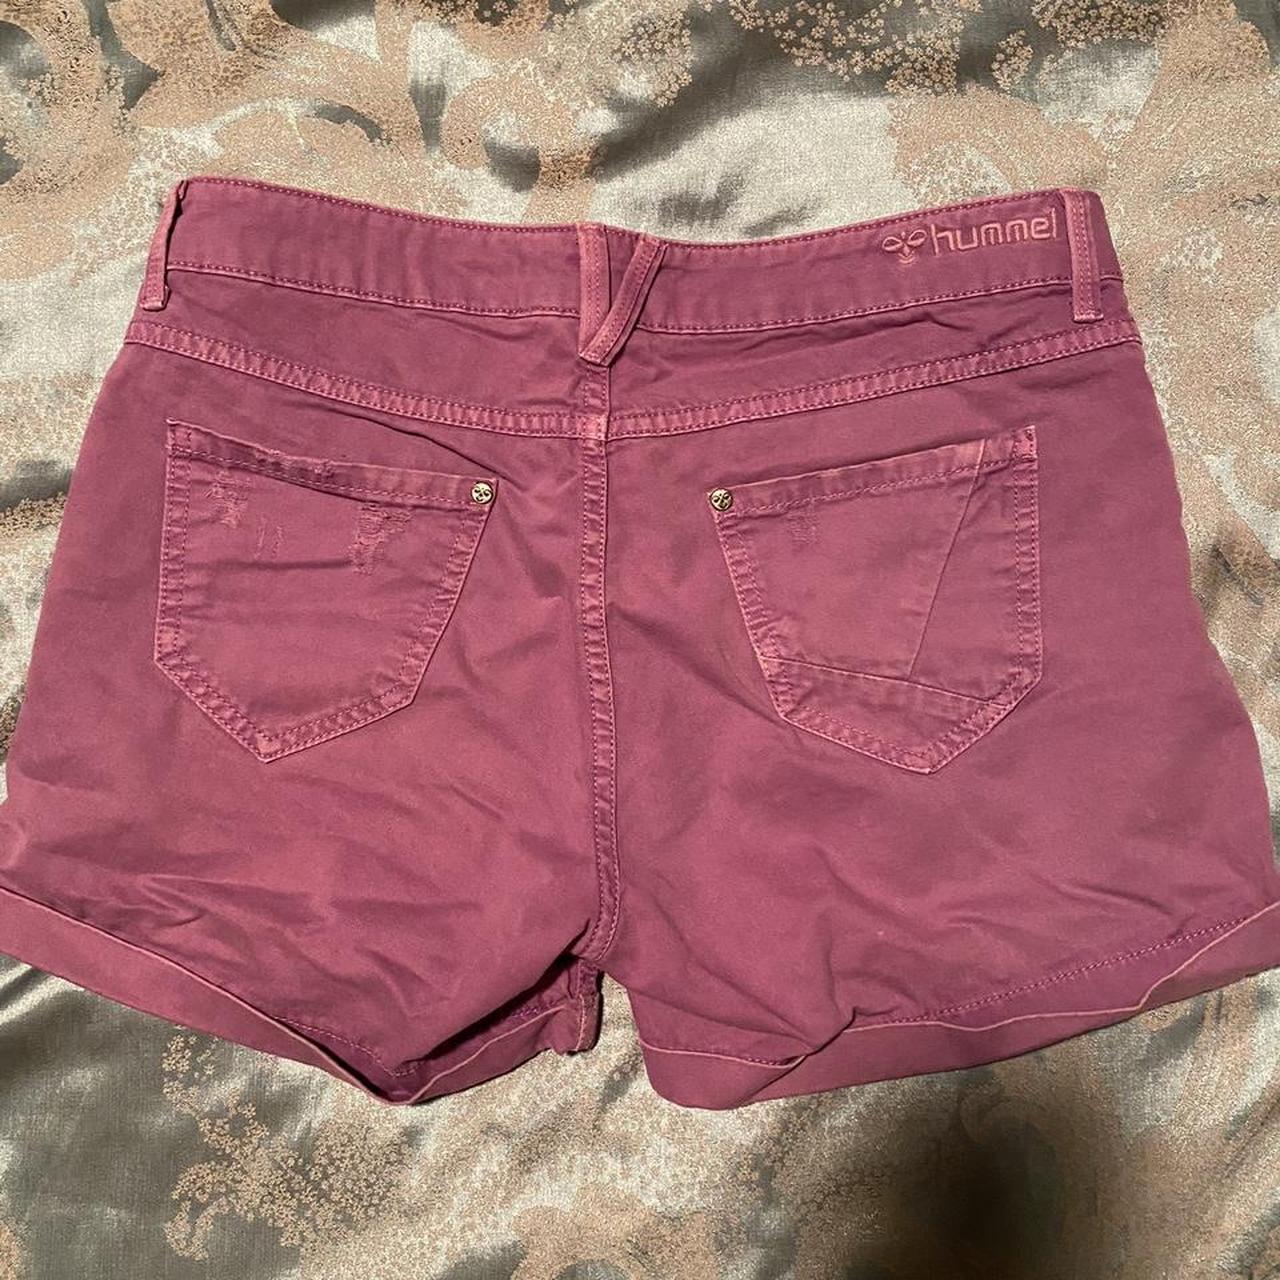 Hummel Women's Purple and Pink Shorts (2)